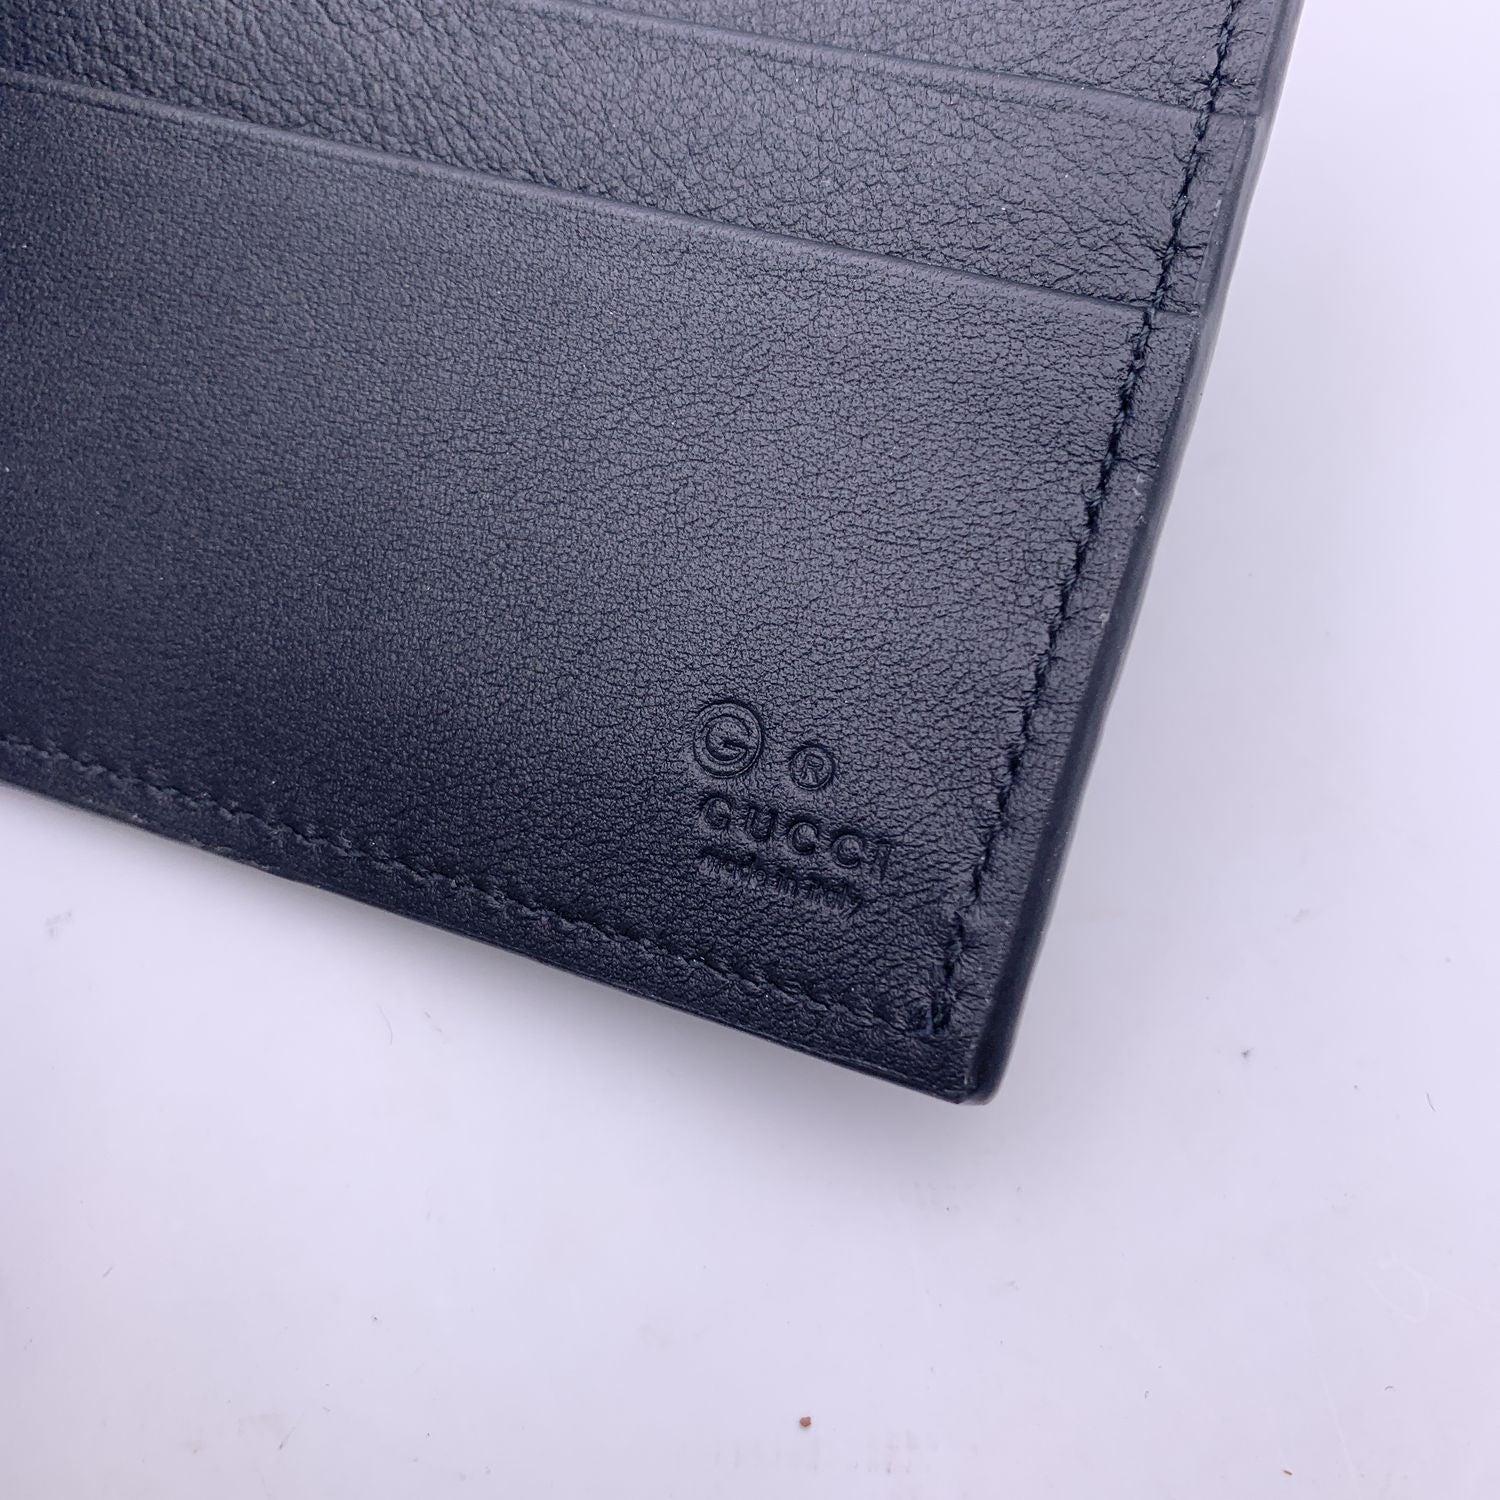 Gucci Black Microguccissima Leather Bifold Wallet Coin Purse 3